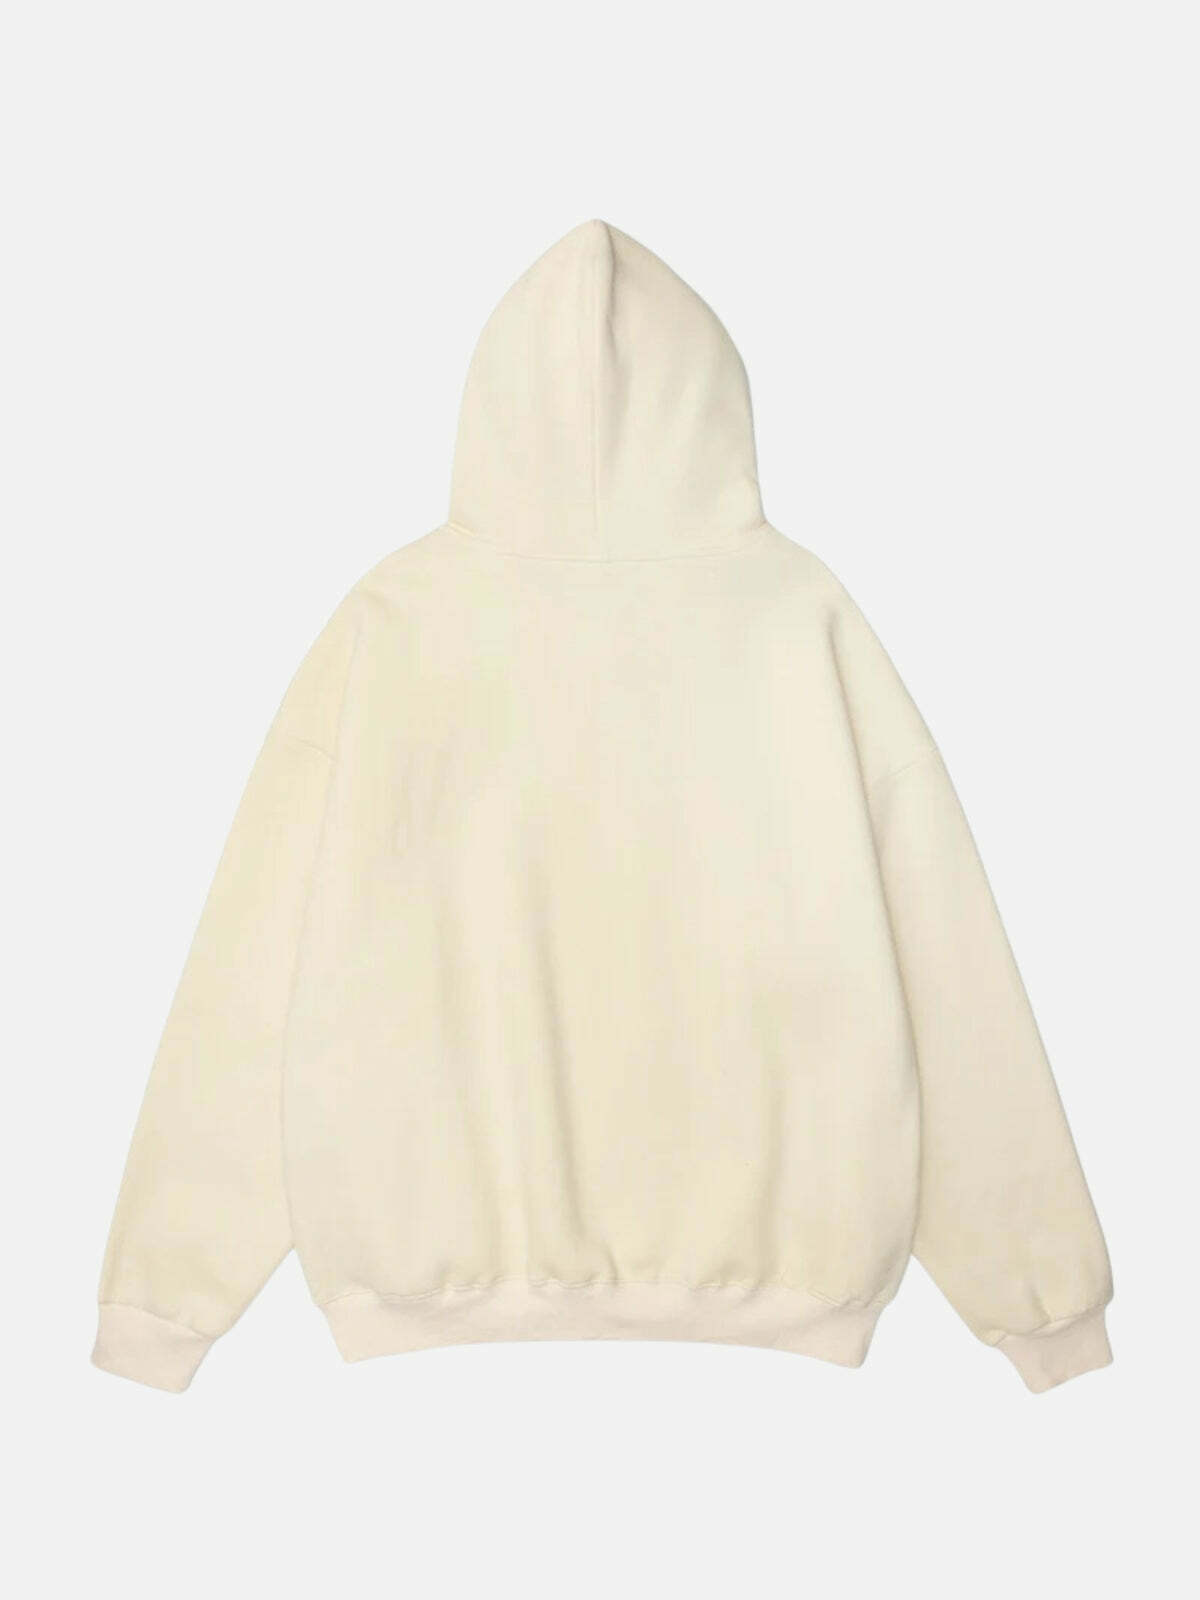 bear print hoodie quirky & vibrant streetwear 6867